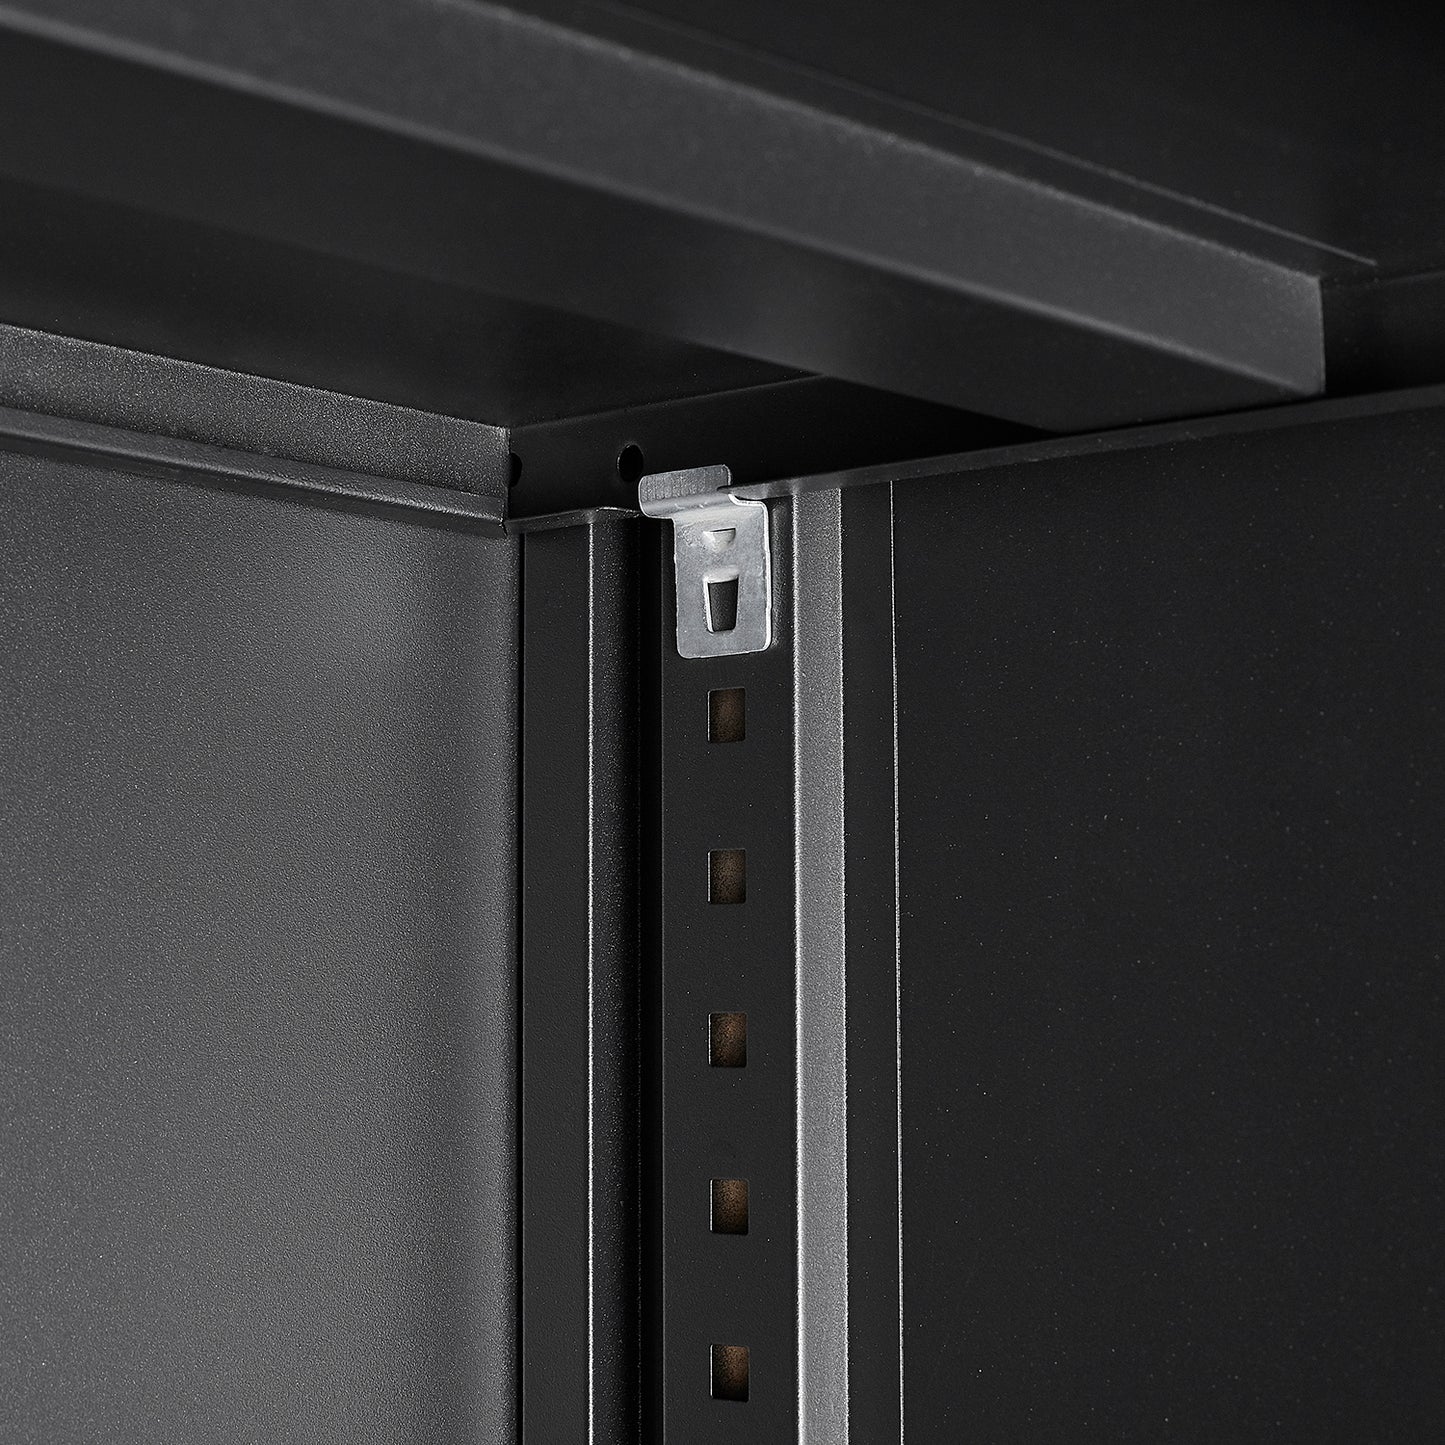 Metal Storage Cabinet with Locking Doors and Adjustable Shelf